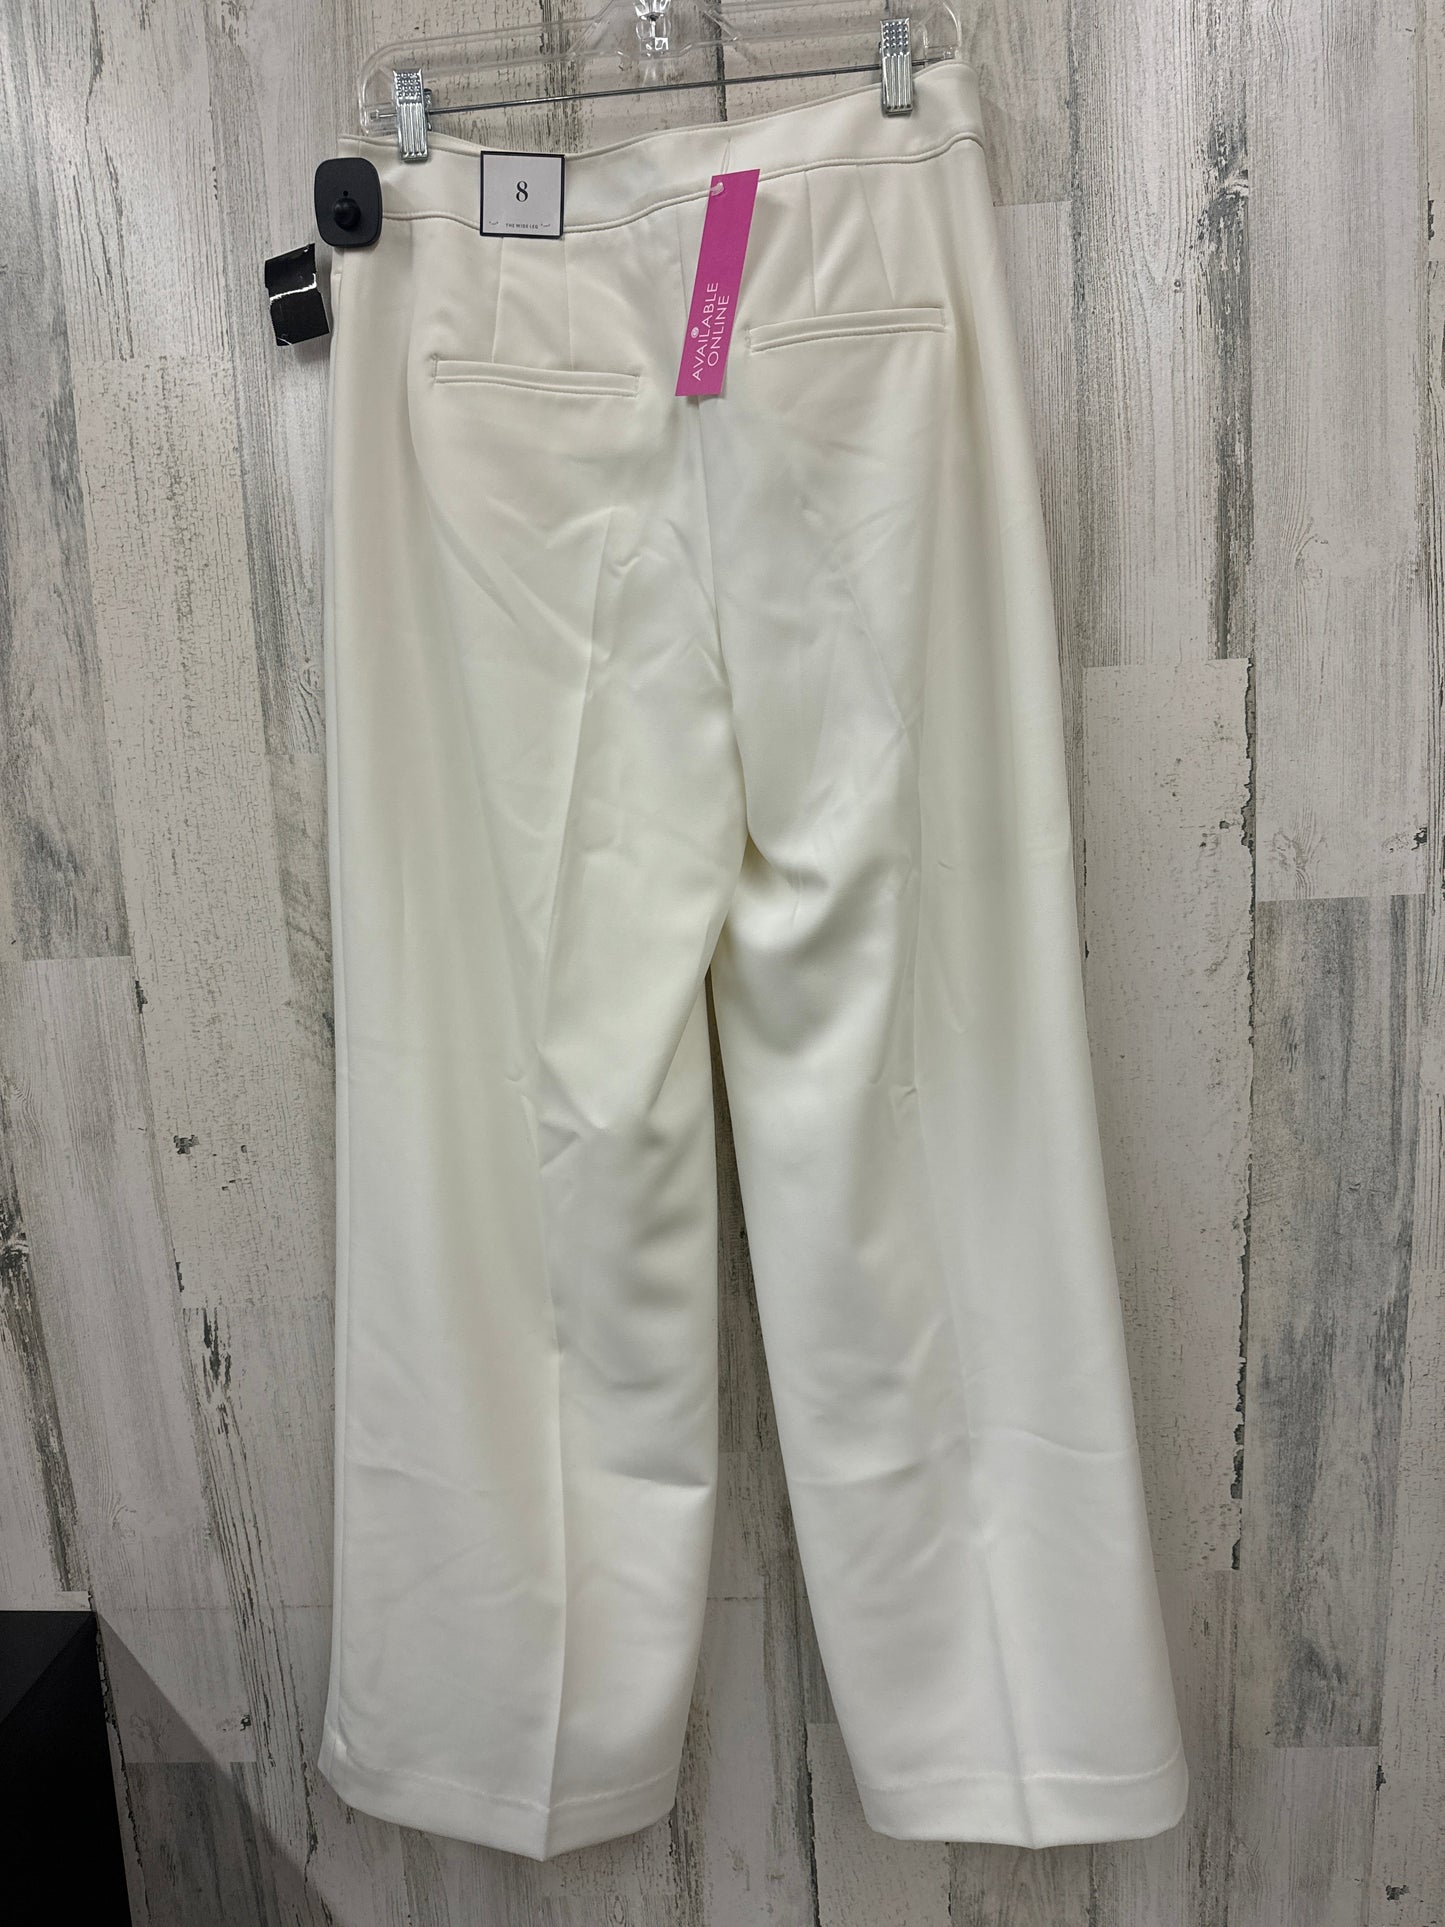 White Pants Dress White House Black Market, Size 8